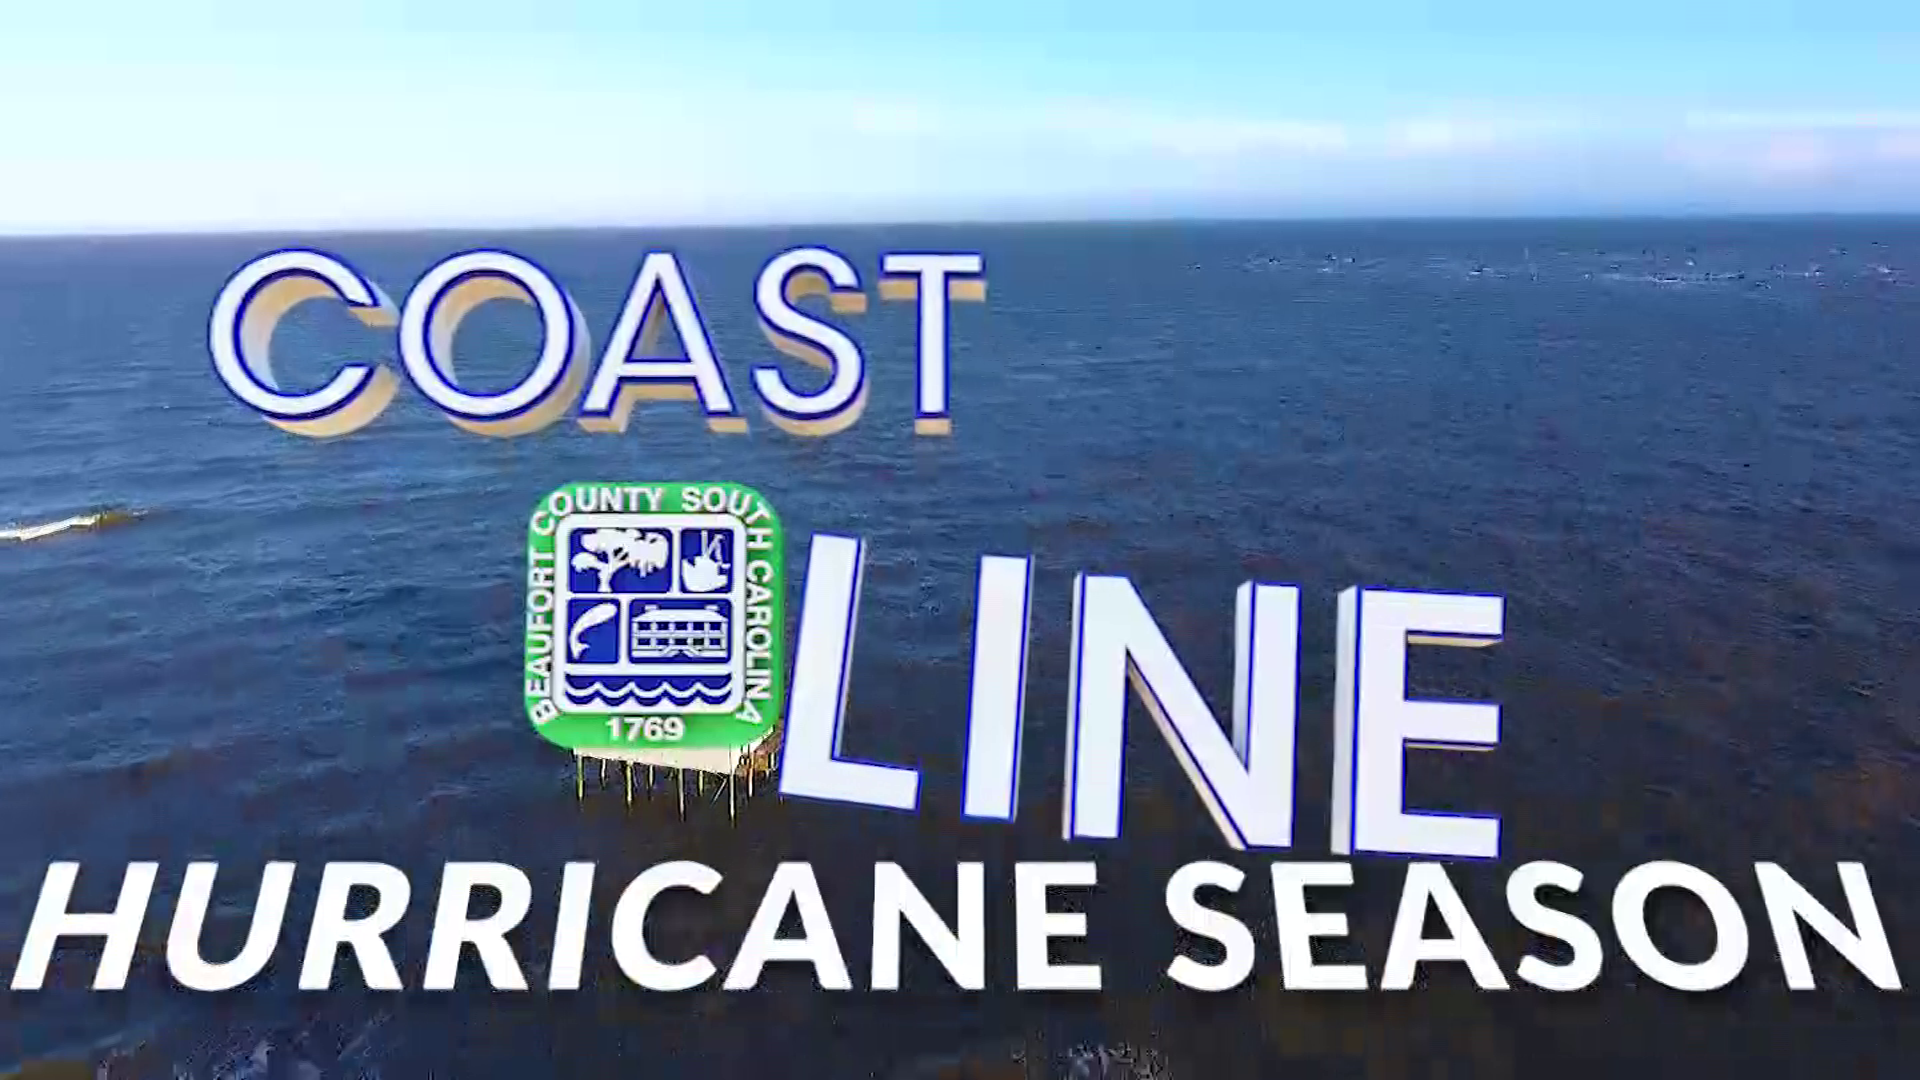 New Episode of Coastline Premieres Tonight